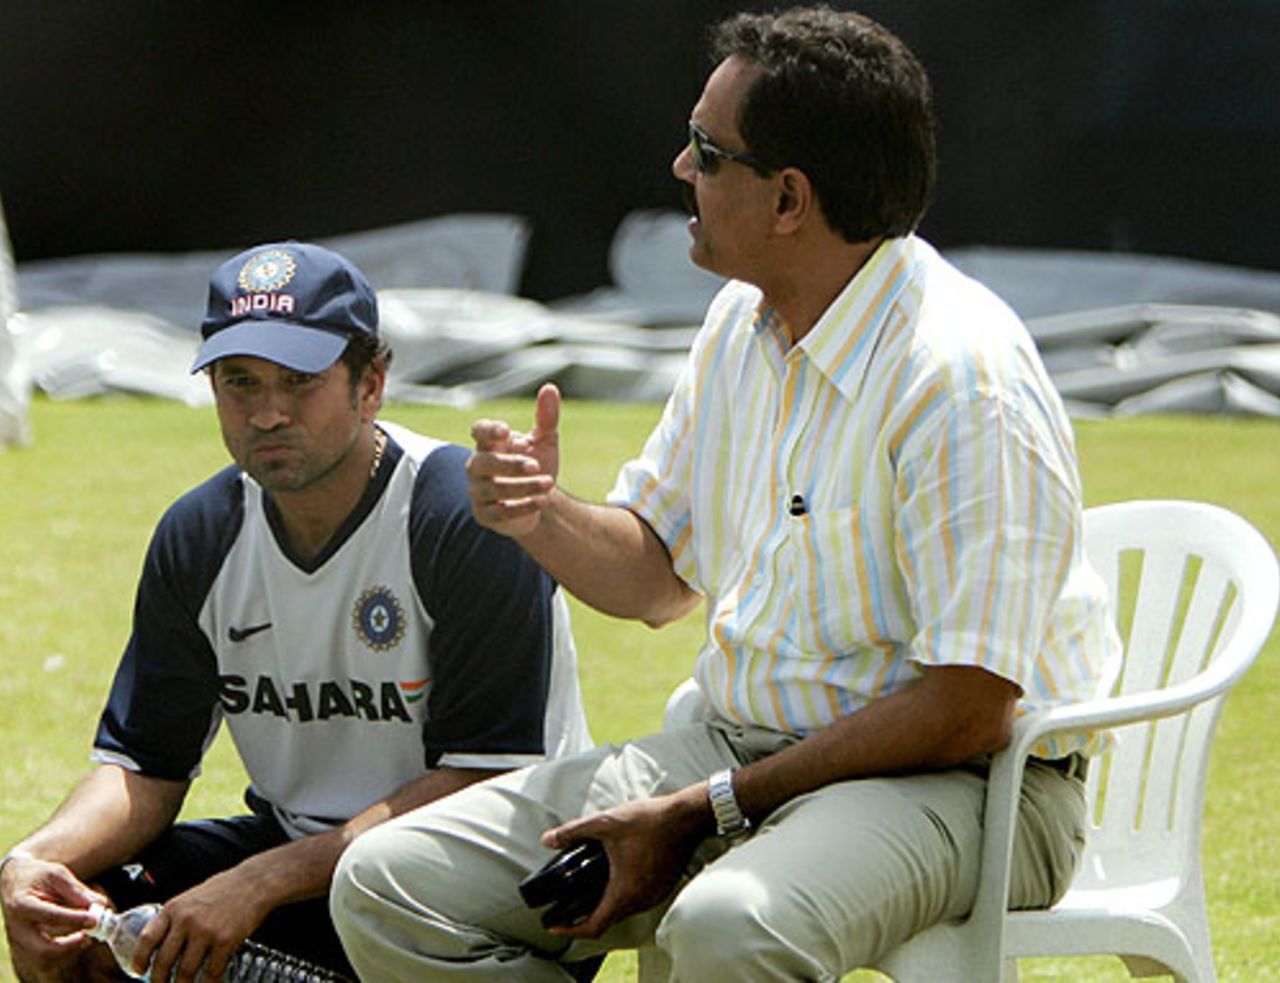 Dilip Vengsarkar, India's chief selector, has a chat with Sachin Tendulkar, India v Australia ODI series, Rajiv Gandhi International Stadium, Hyderabad, October 4, 2007